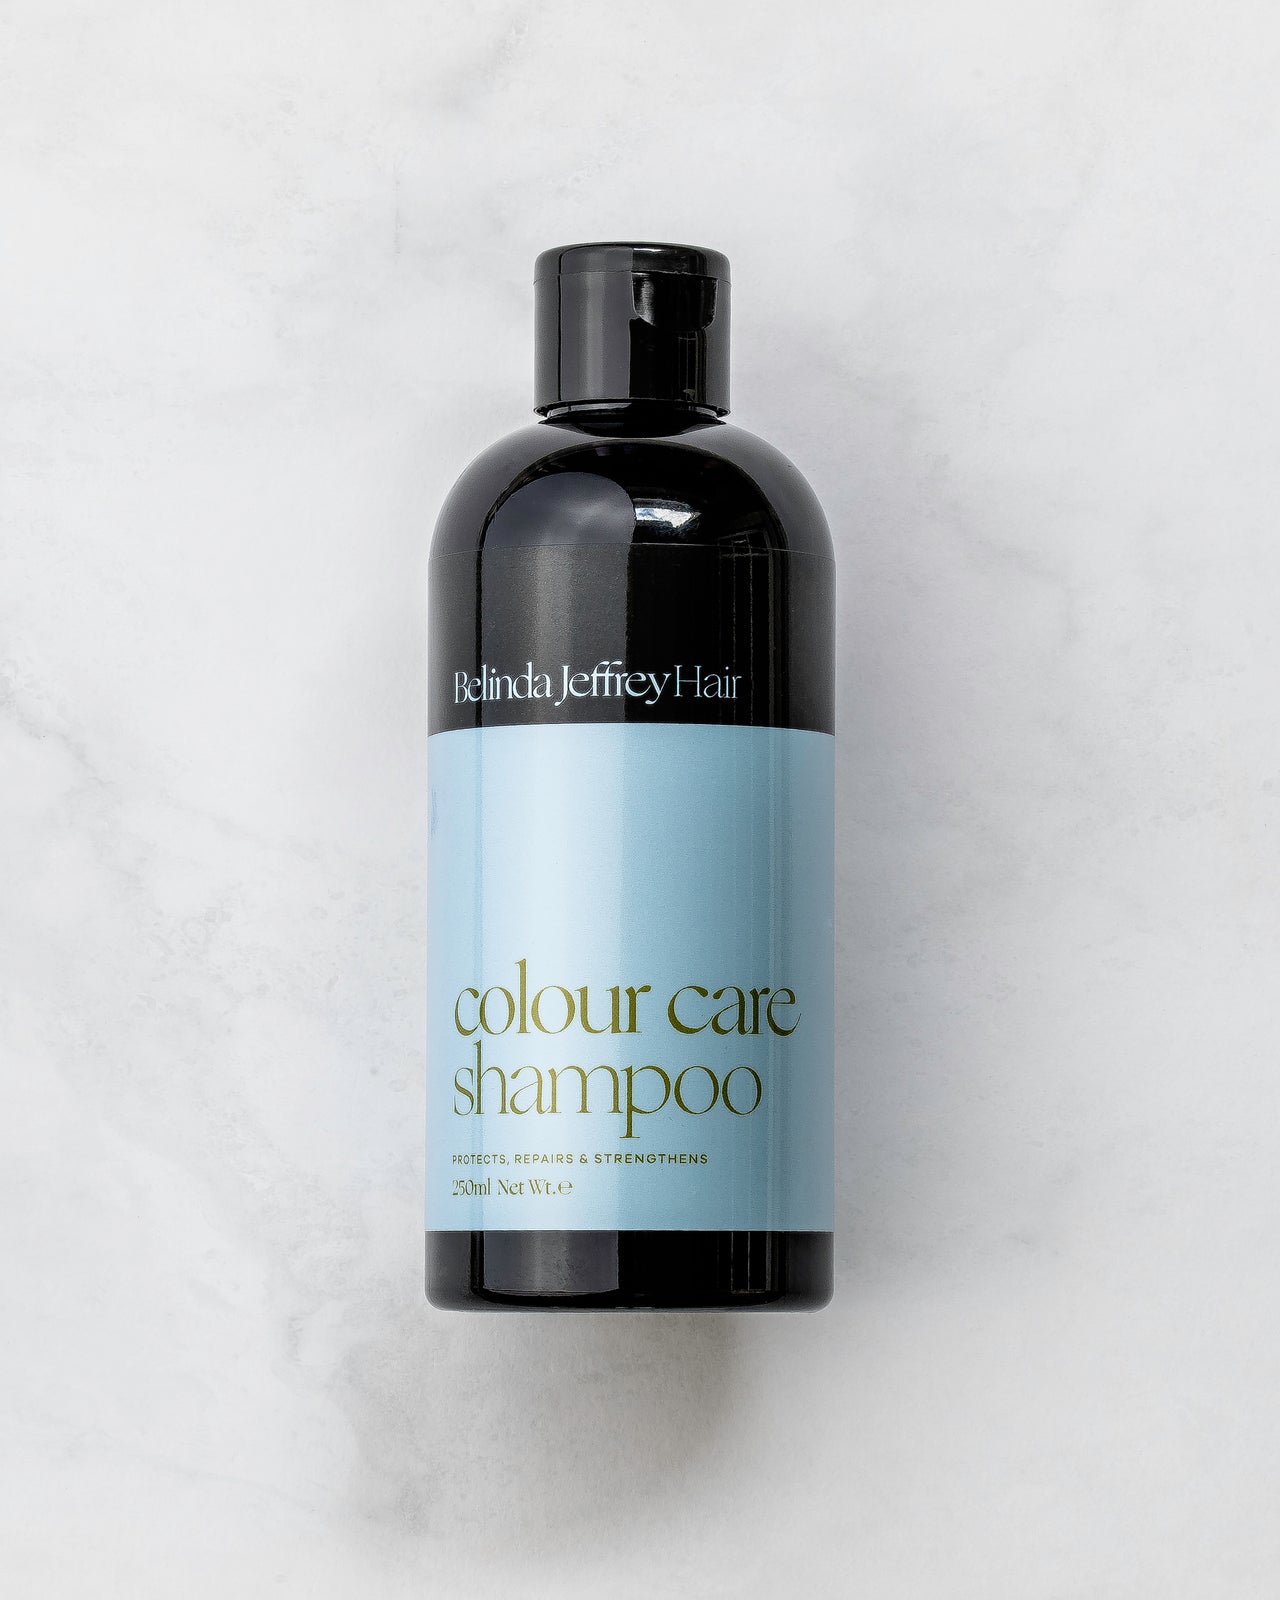 Colour care shampoo by Belinda Jeffrey Hair. Black bottle with a blue label.